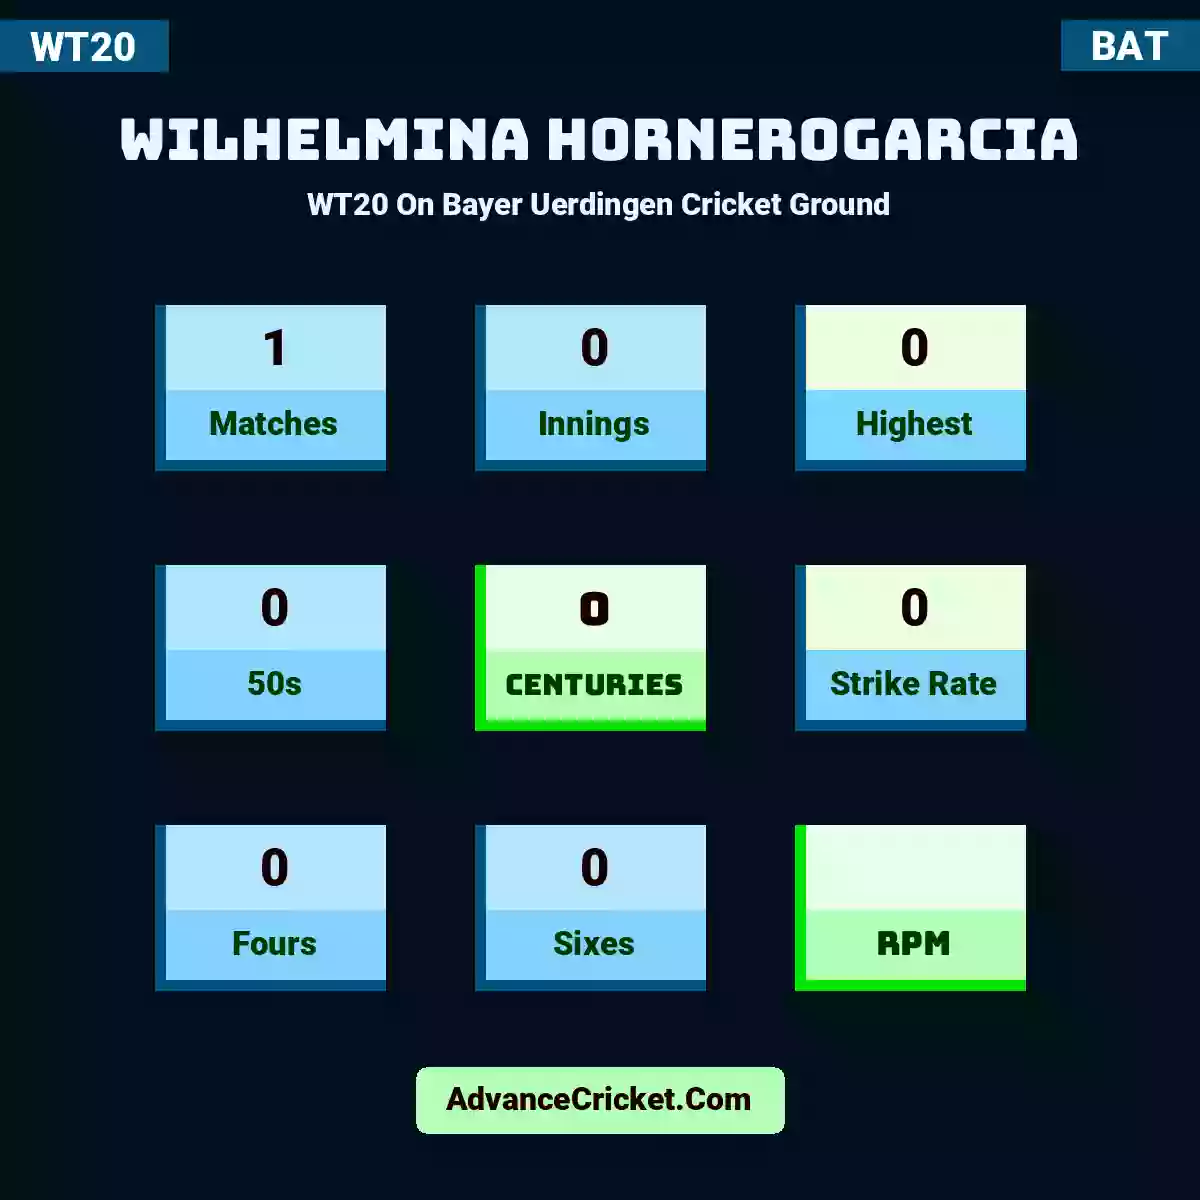 Wilhelmina Hornerogarcia WT20  On Bayer Uerdingen Cricket Ground, Wilhelmina Hornerogarcia played 1 matches, scored 0 runs as highest, 0 half-centuries, and 0 centuries, with a strike rate of 0. W.Hornerogarcia hit 0 fours and 0 sixes.